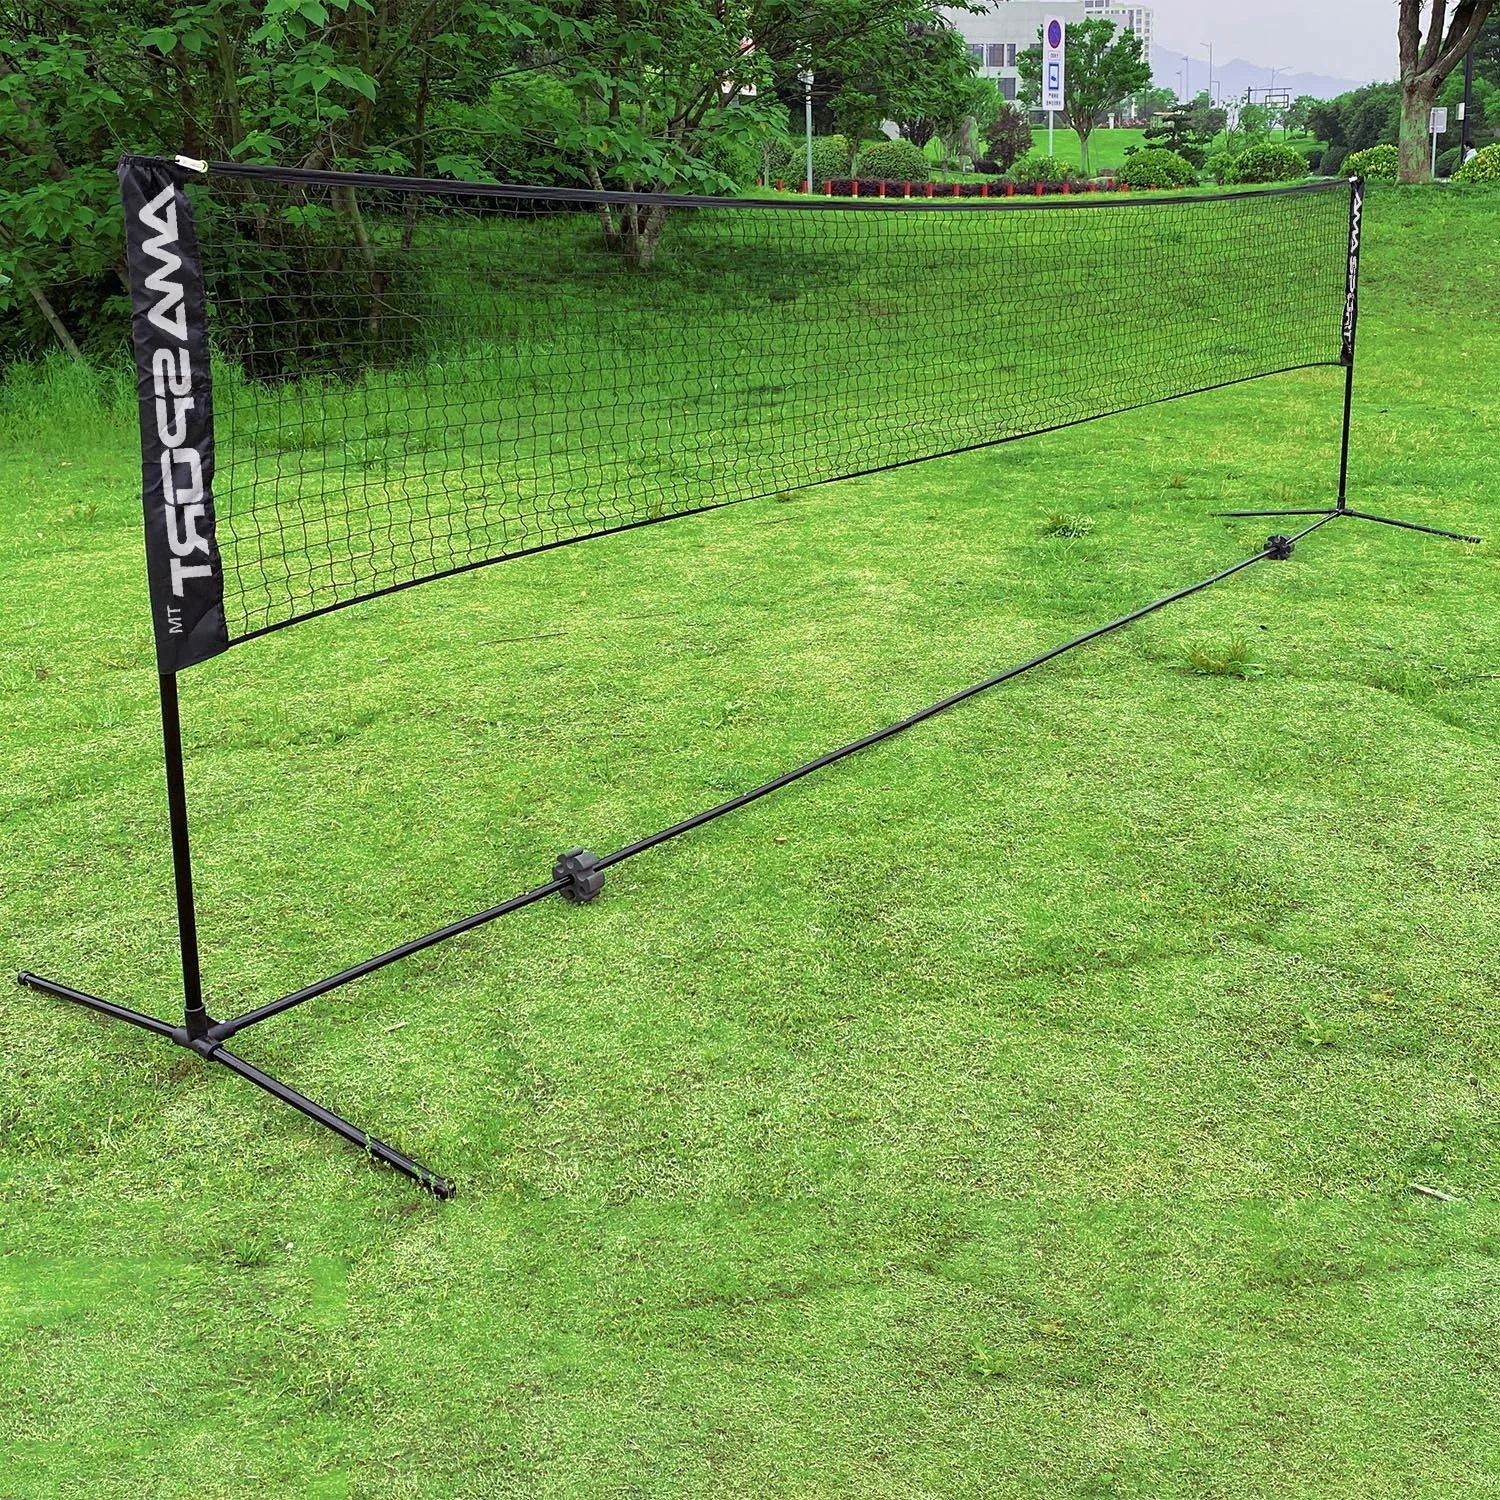 Source 2020 Best Adjustable Portable Pop Up Badminton Net And Post Outdoor on m.alibaba